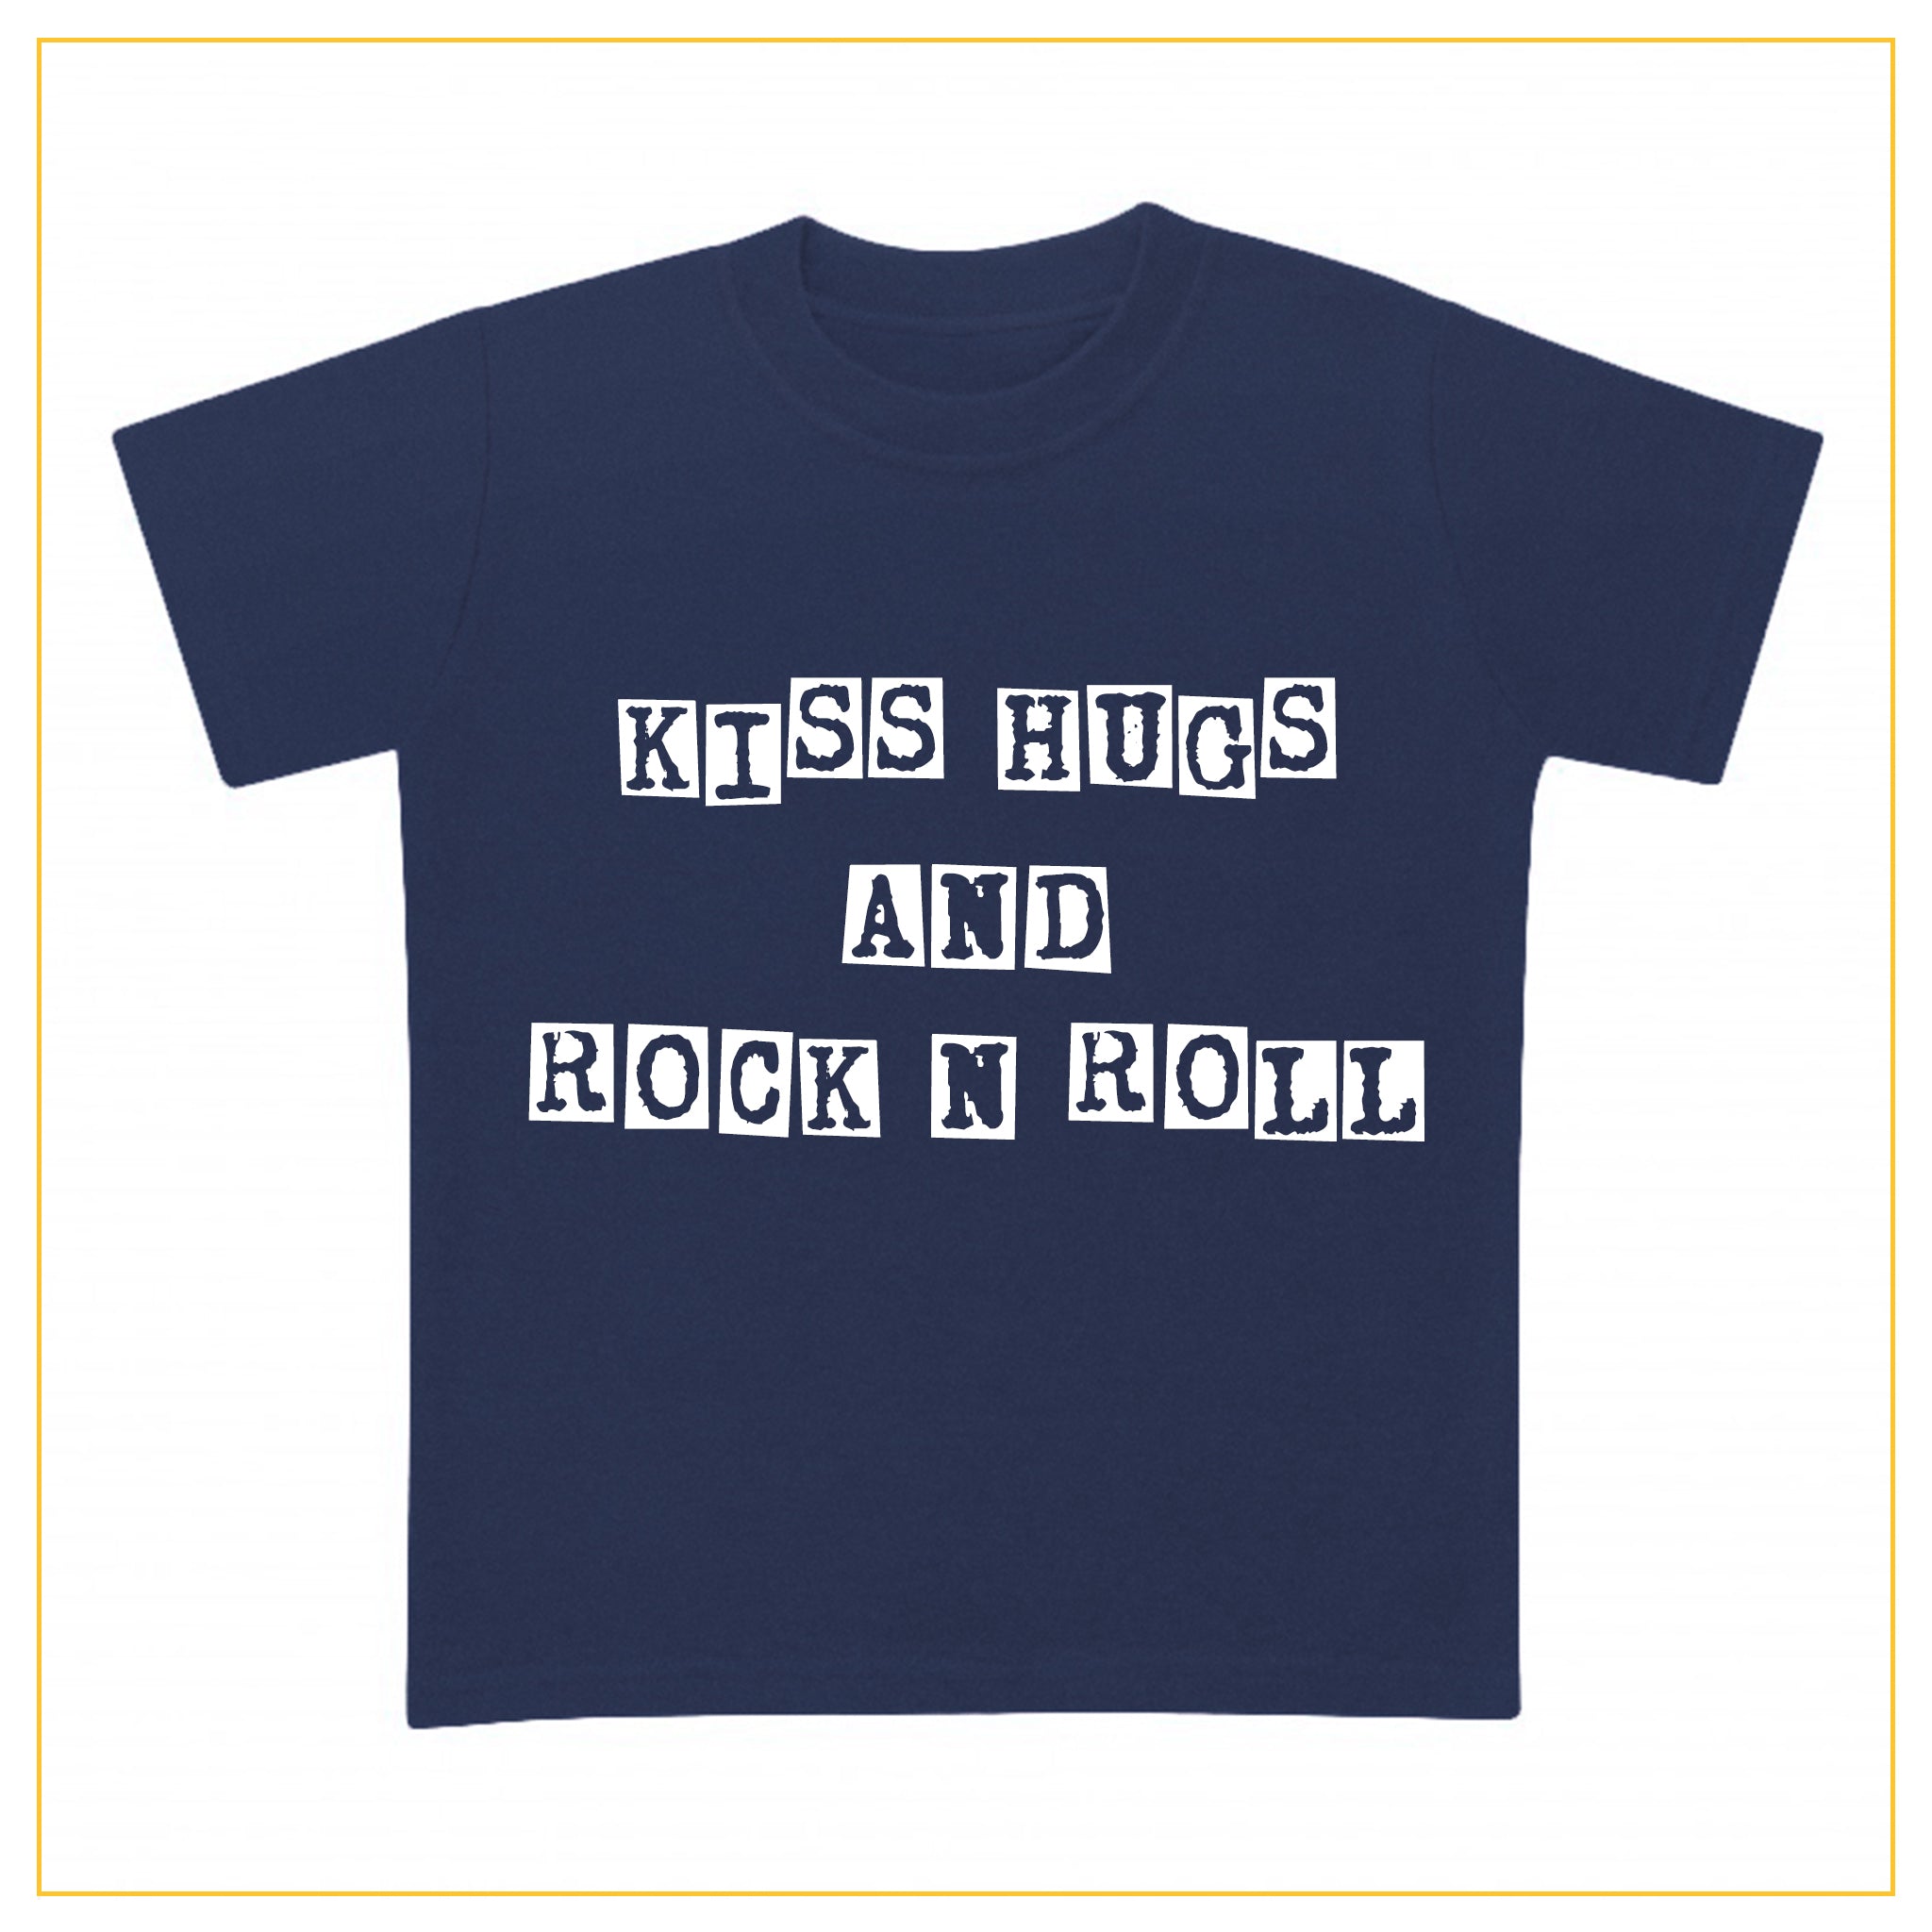 kiss hugs and rock n roll kids t-shirt in navy blue